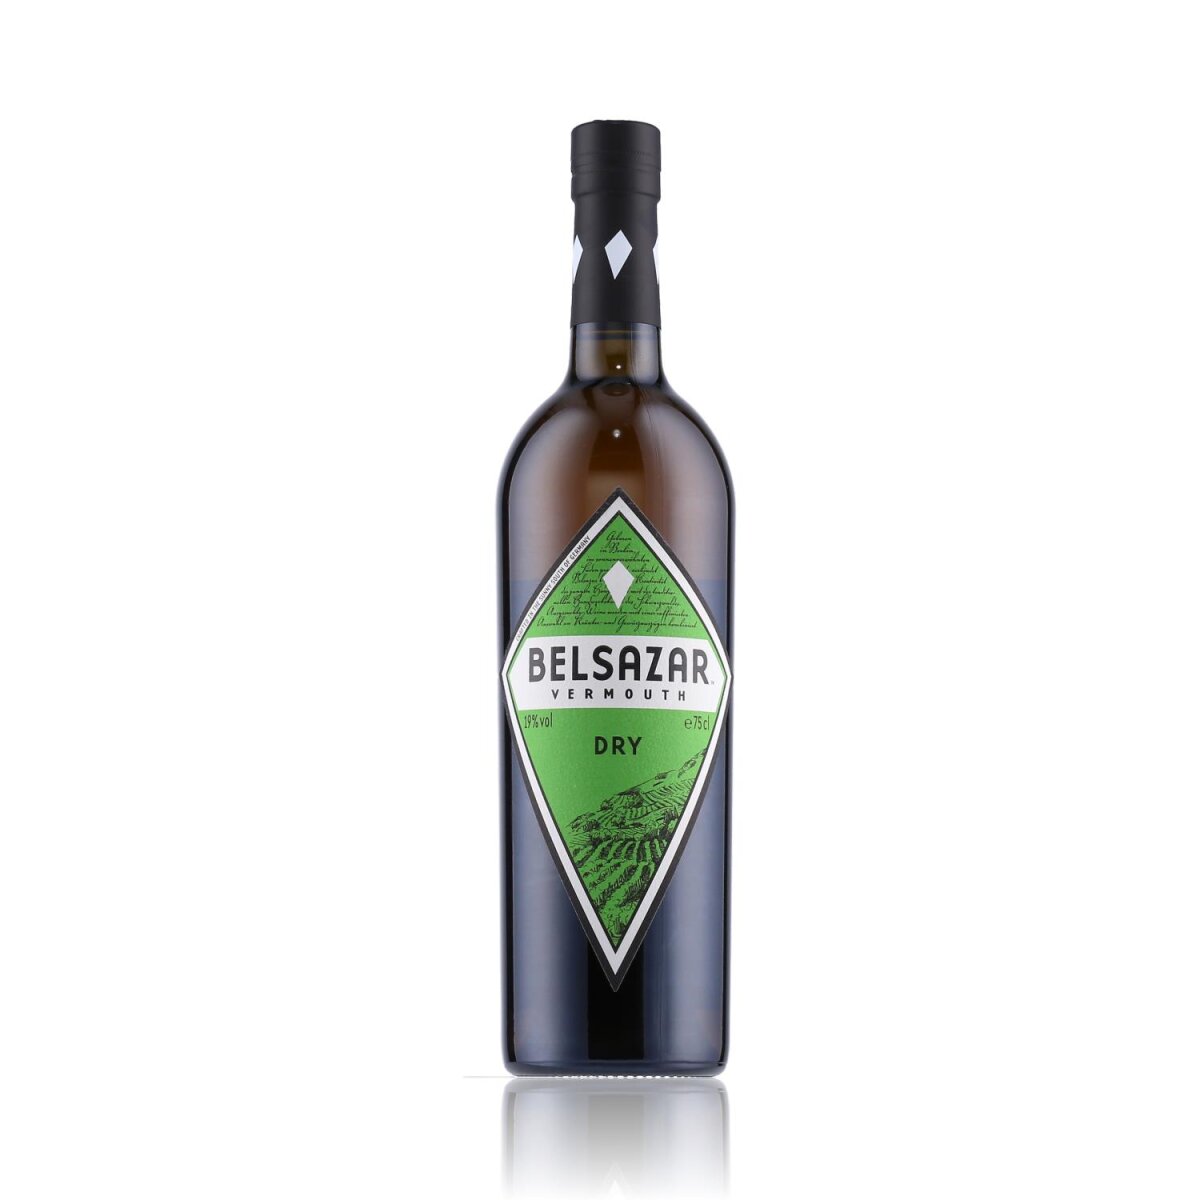 Vermouth 19% 16,89 0,75l, Dry Vol. Belsazar €